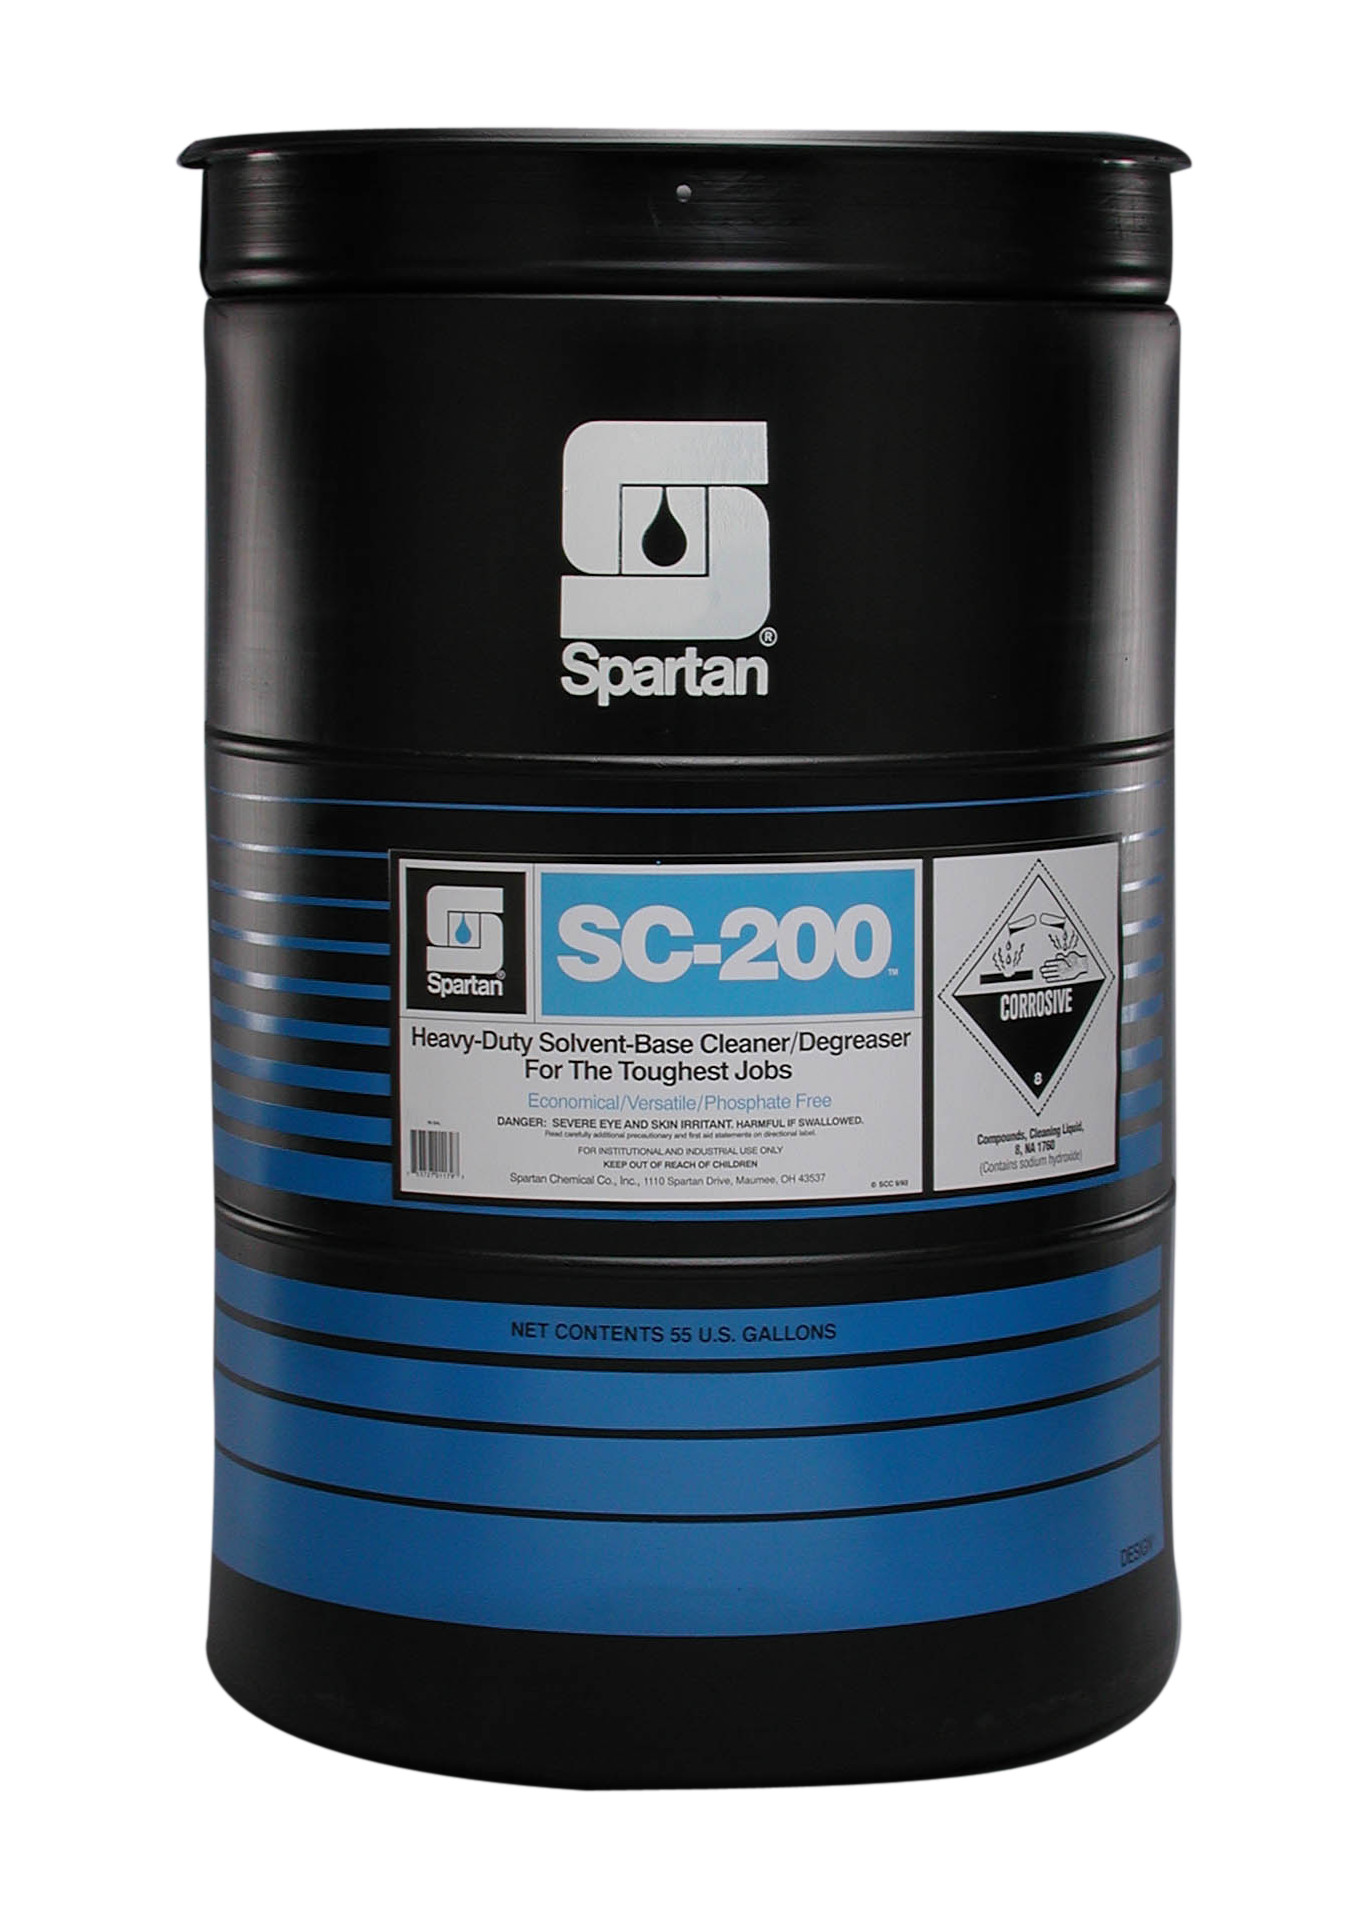 Spartan Chemical Company SC-200, 55 GAL DRUM